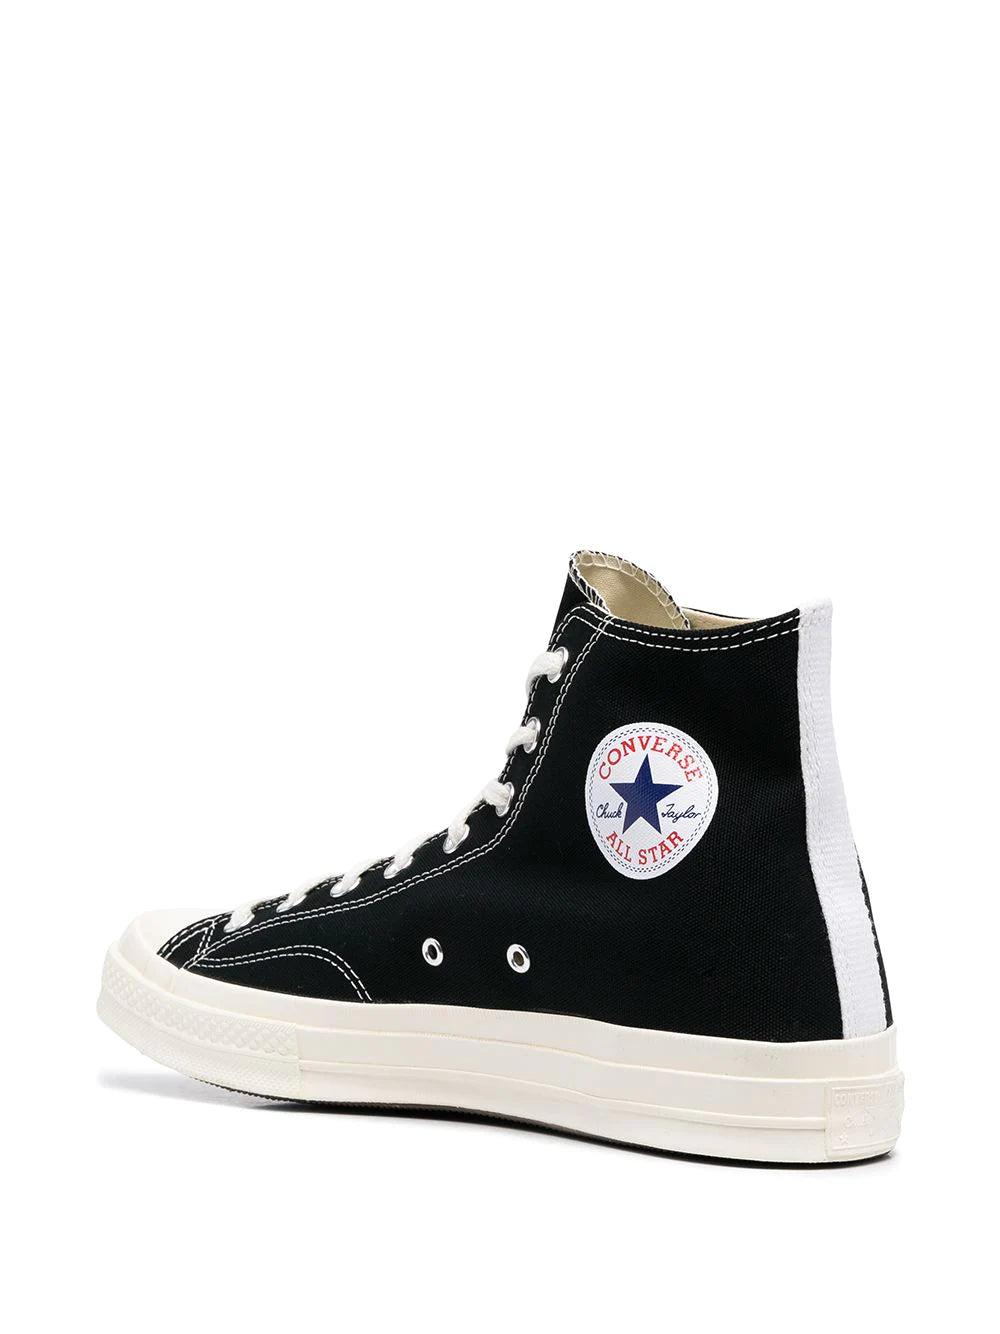 Converse Chuck 70 - black high-top sneakers